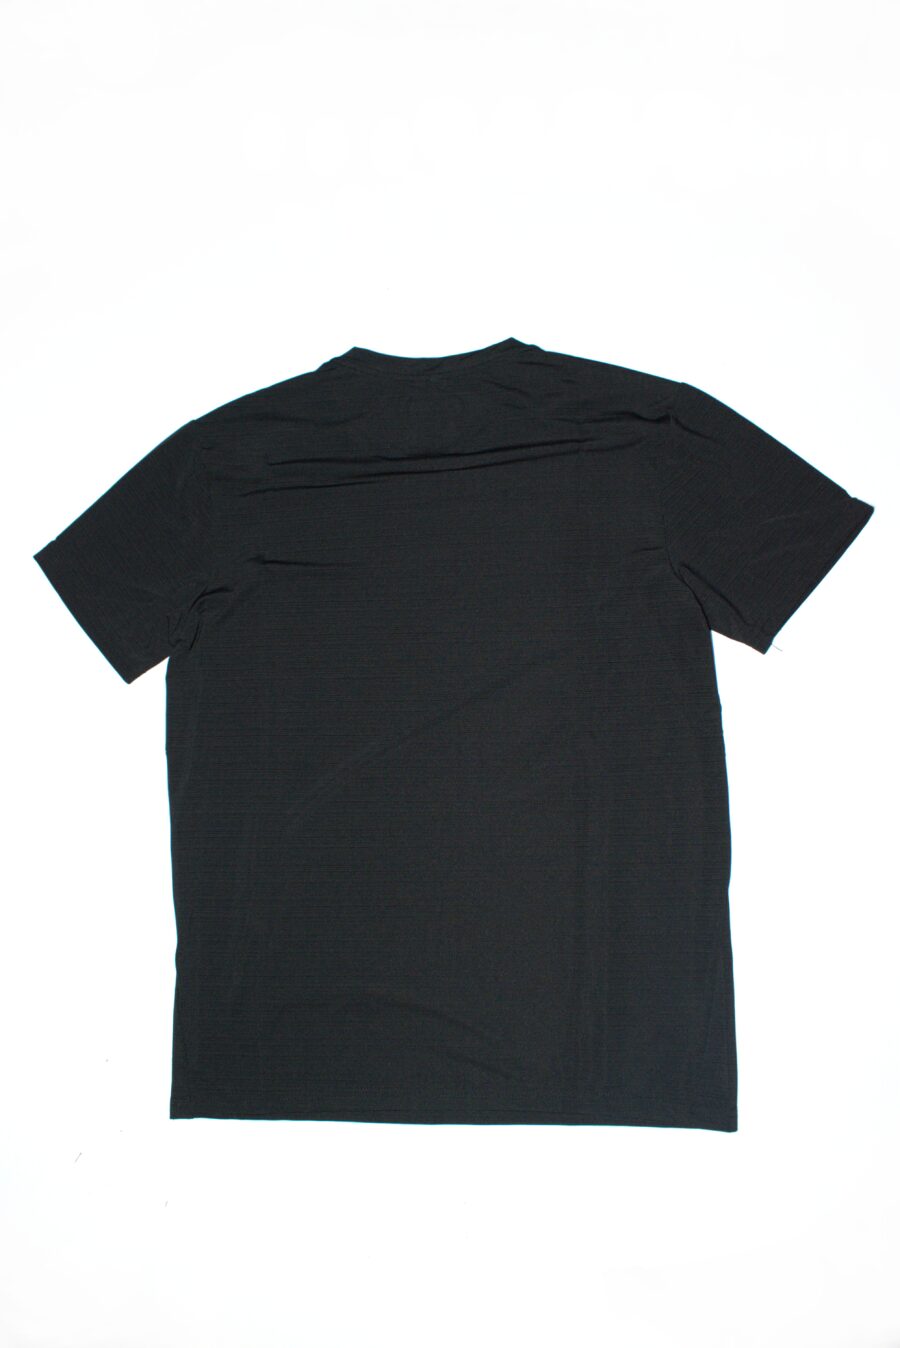 Tee-shirt-sport-homme-manches-courtes-noir